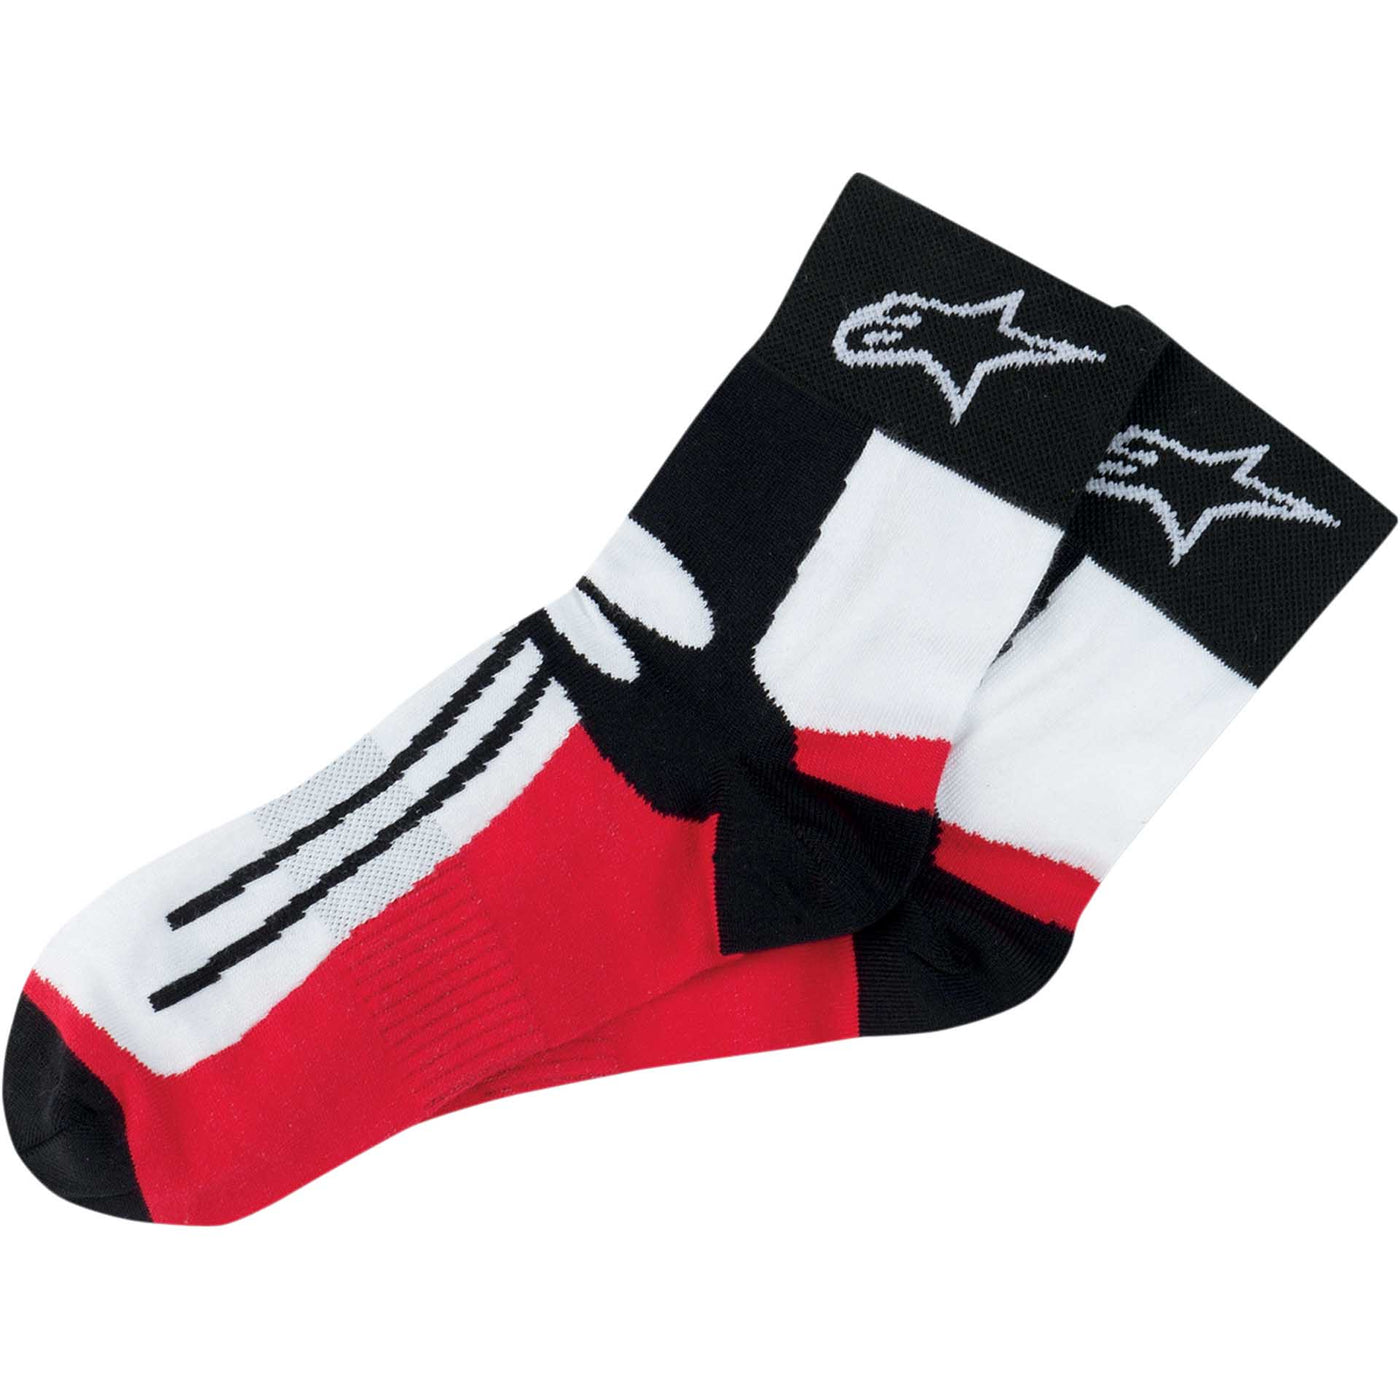 Alpinestars Road Racing Socks - Over-Ankle Motorcycle Socks